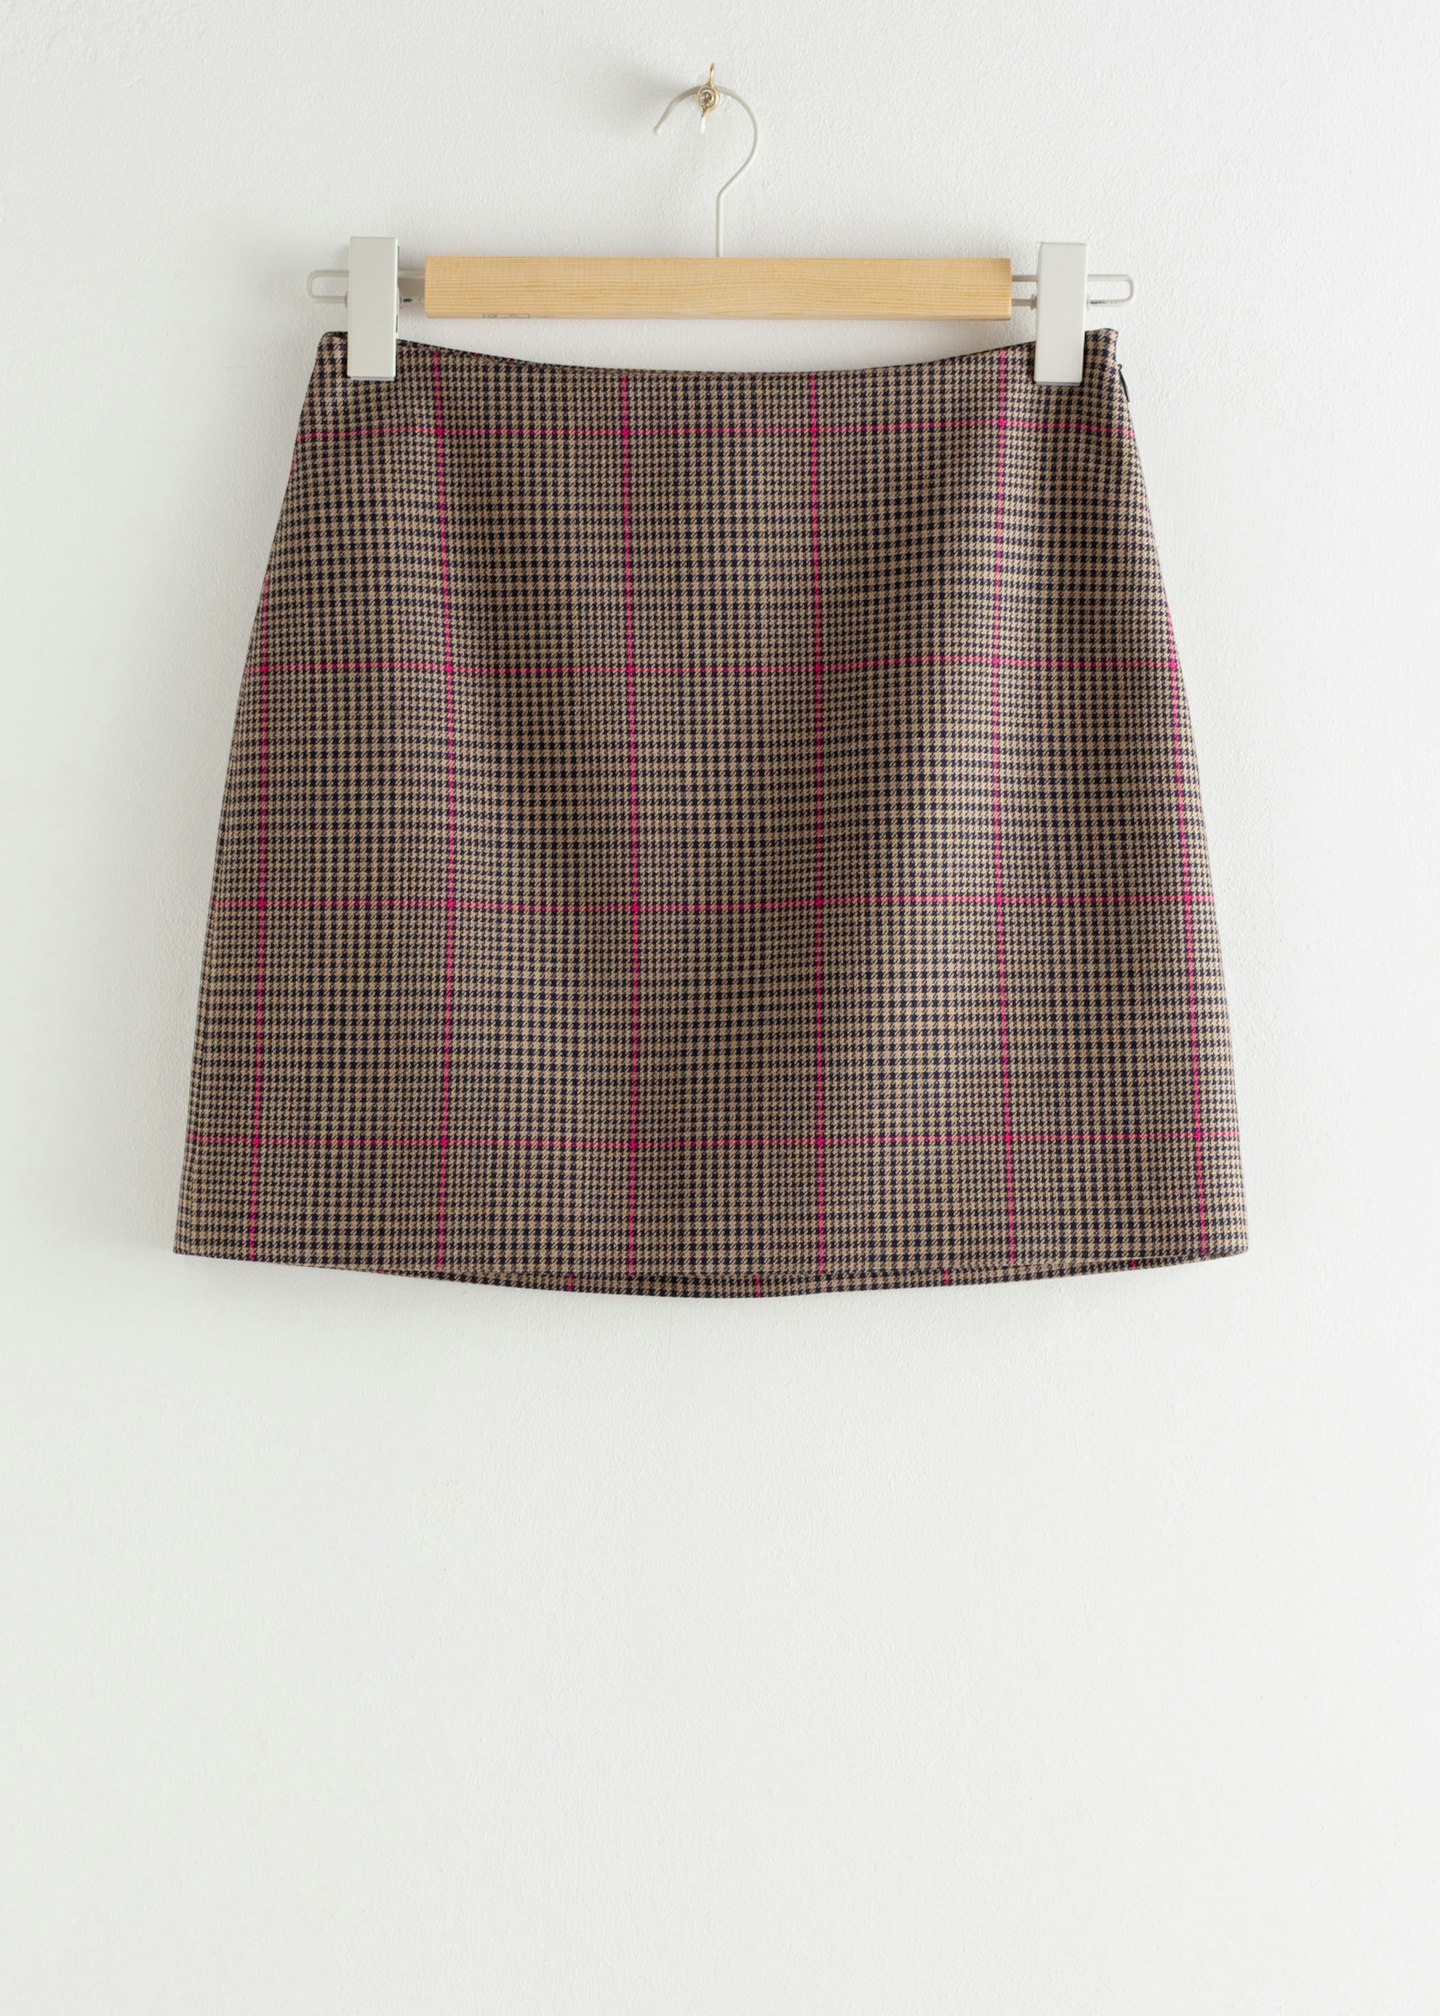 & Other Stories, Plaid Mini Skirt, £27